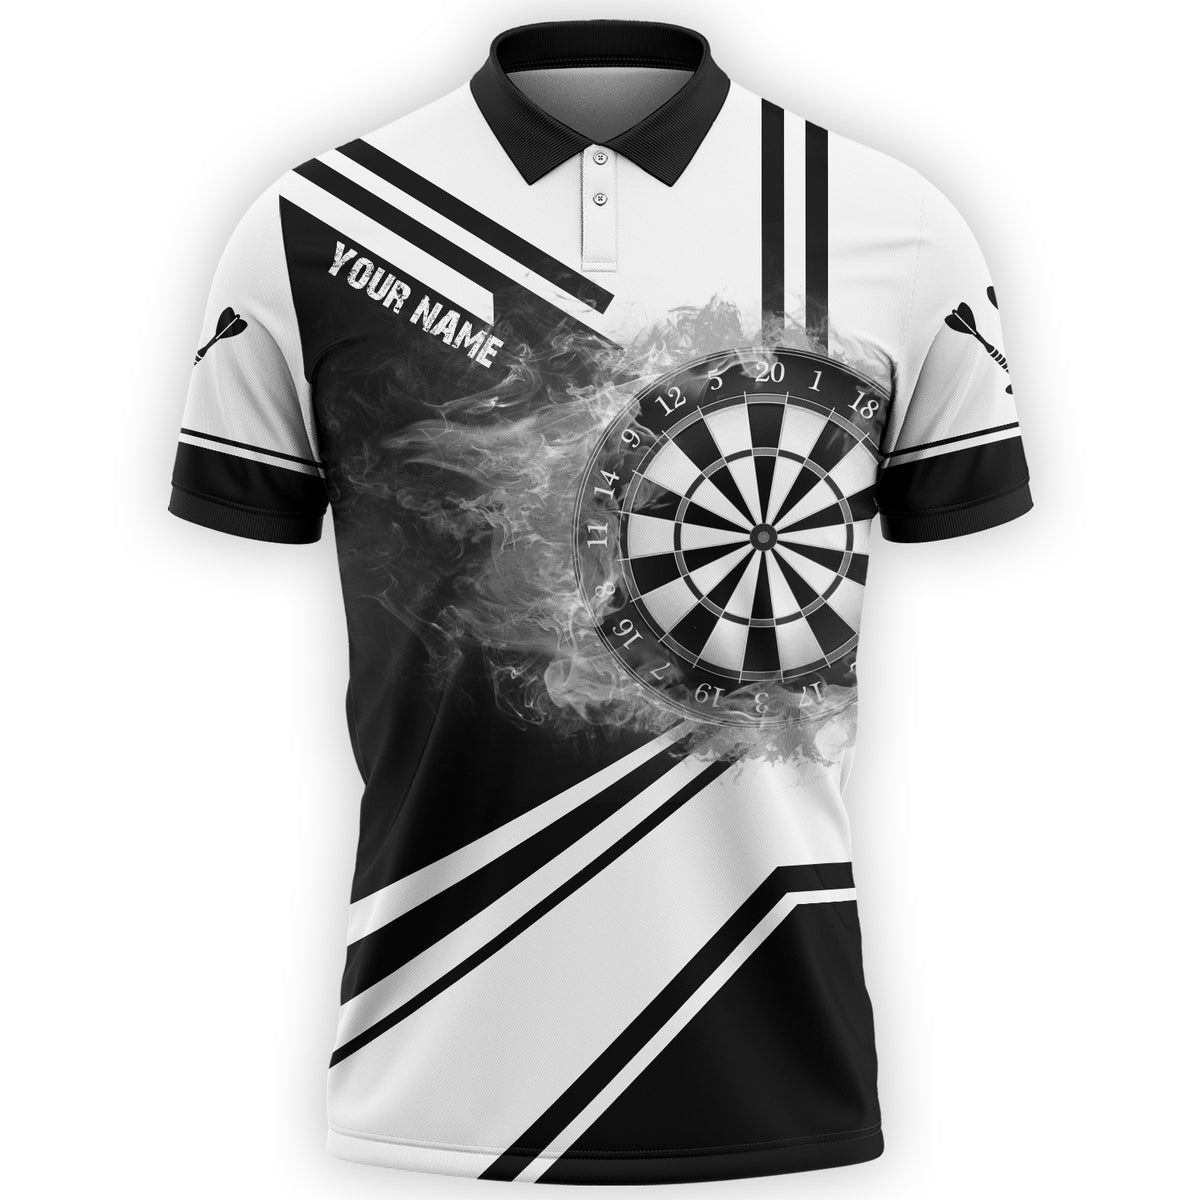 Black and White Dart Polo Shirt/ Personalized Name Dartboard Fire Shirt/ Uniform Dart Team